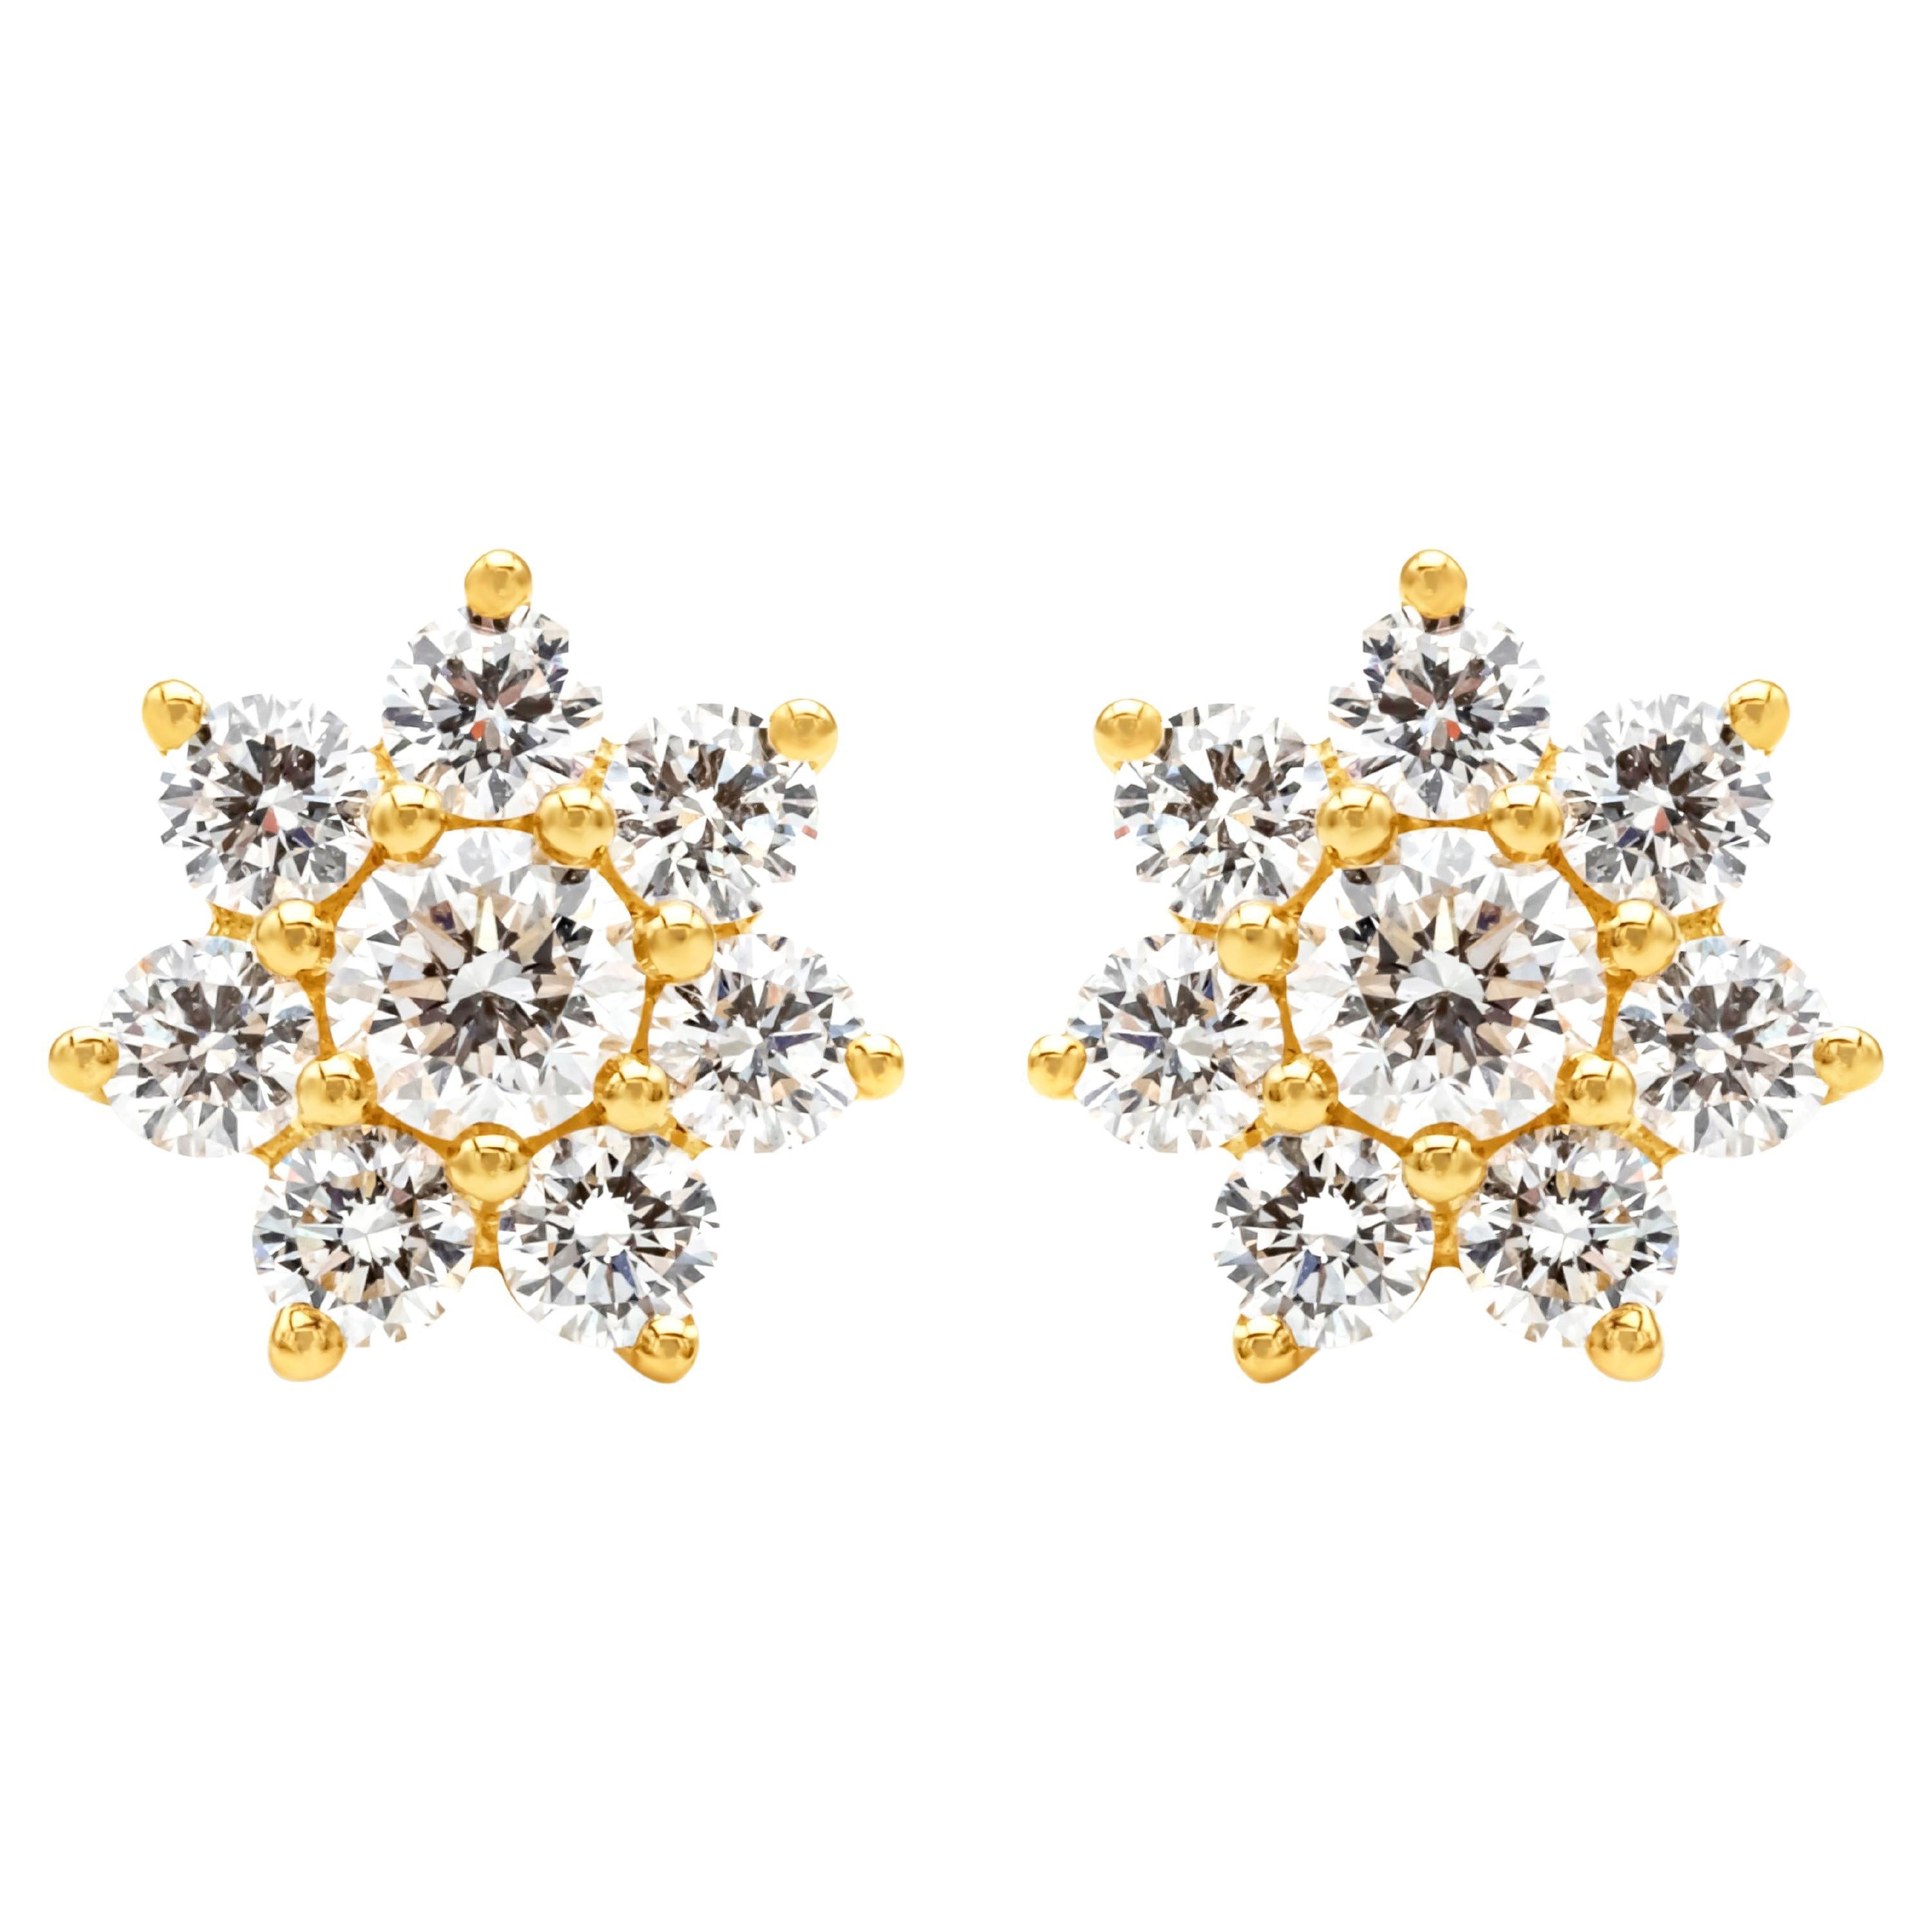 Roman Malakov 1.35 Carats Total Brilliant Round Cut Diamond Flower Stud Earrings